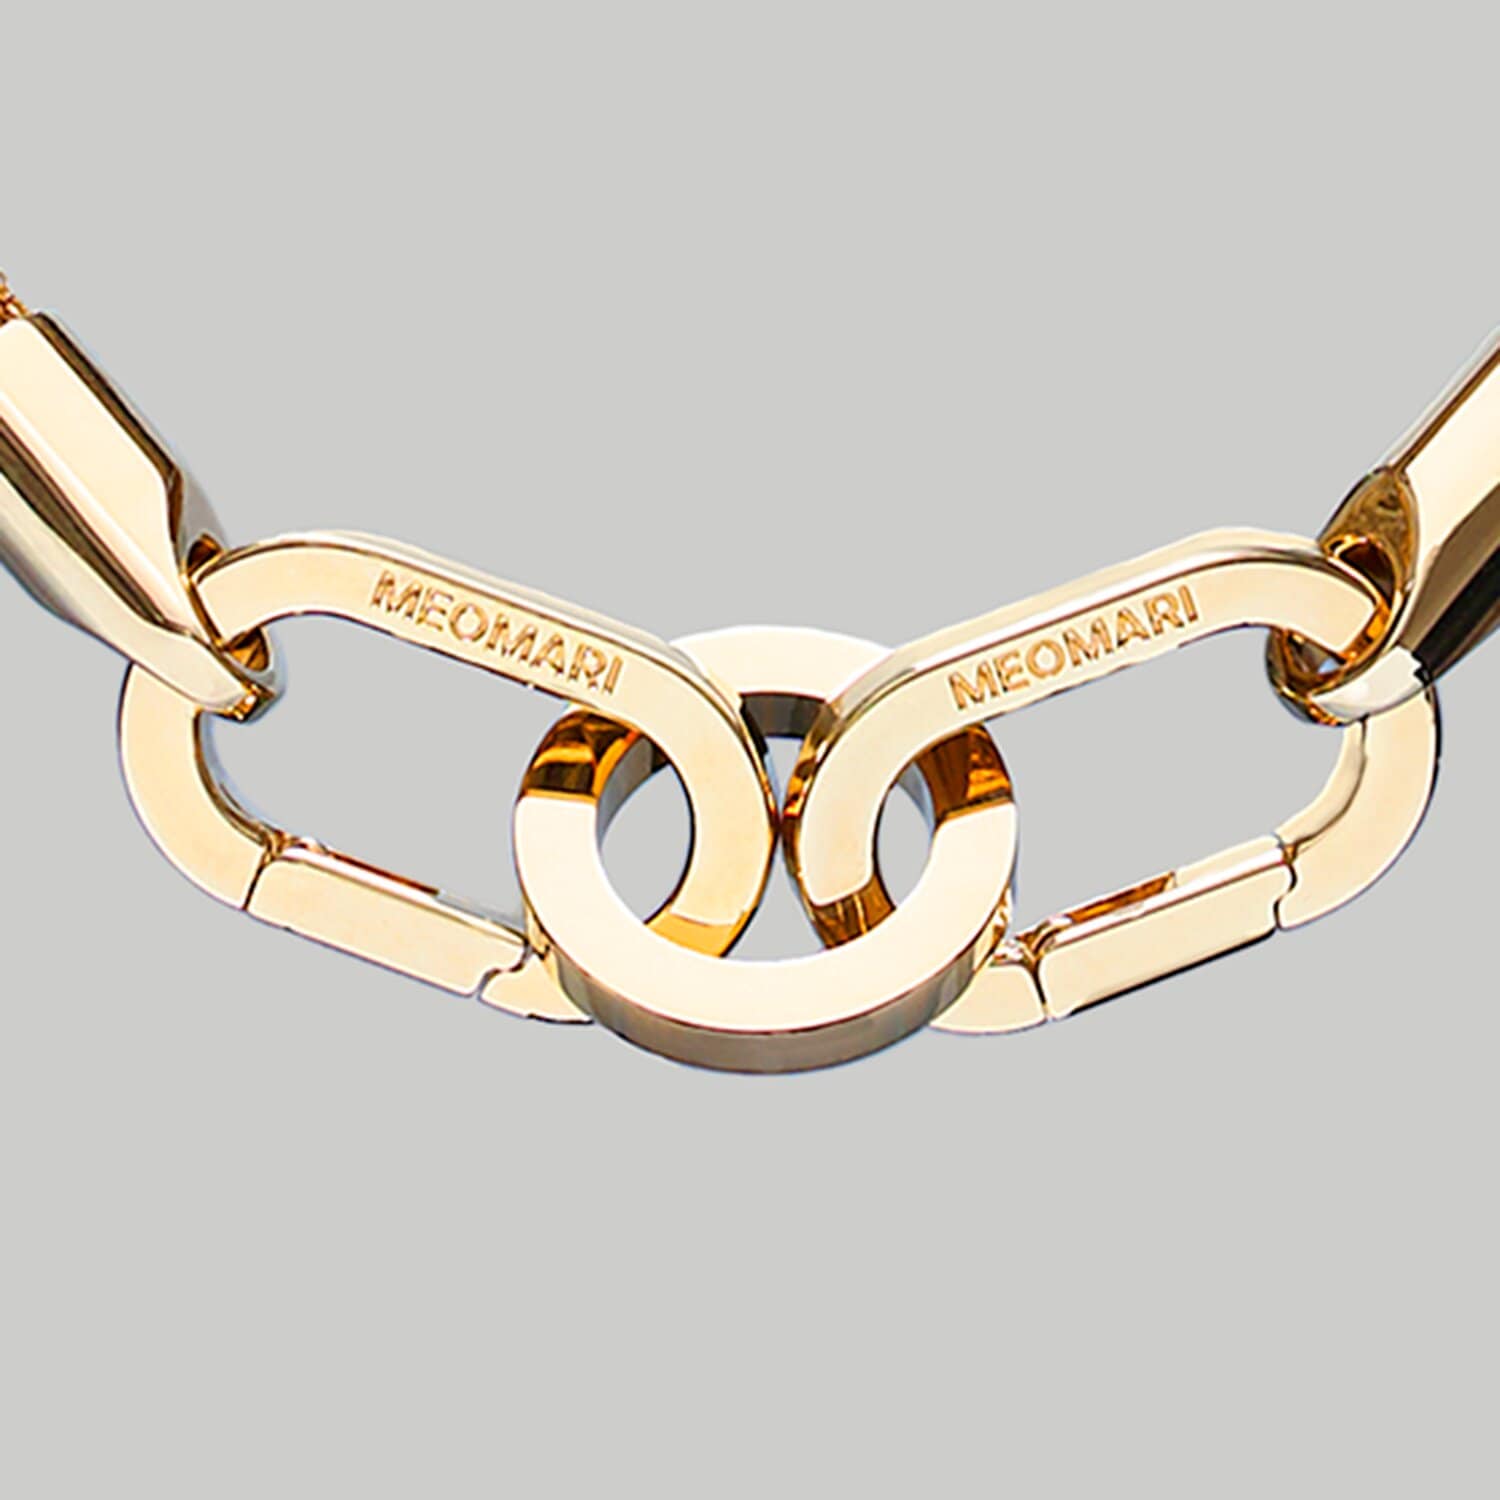 Luxury dog collar in Gold braided